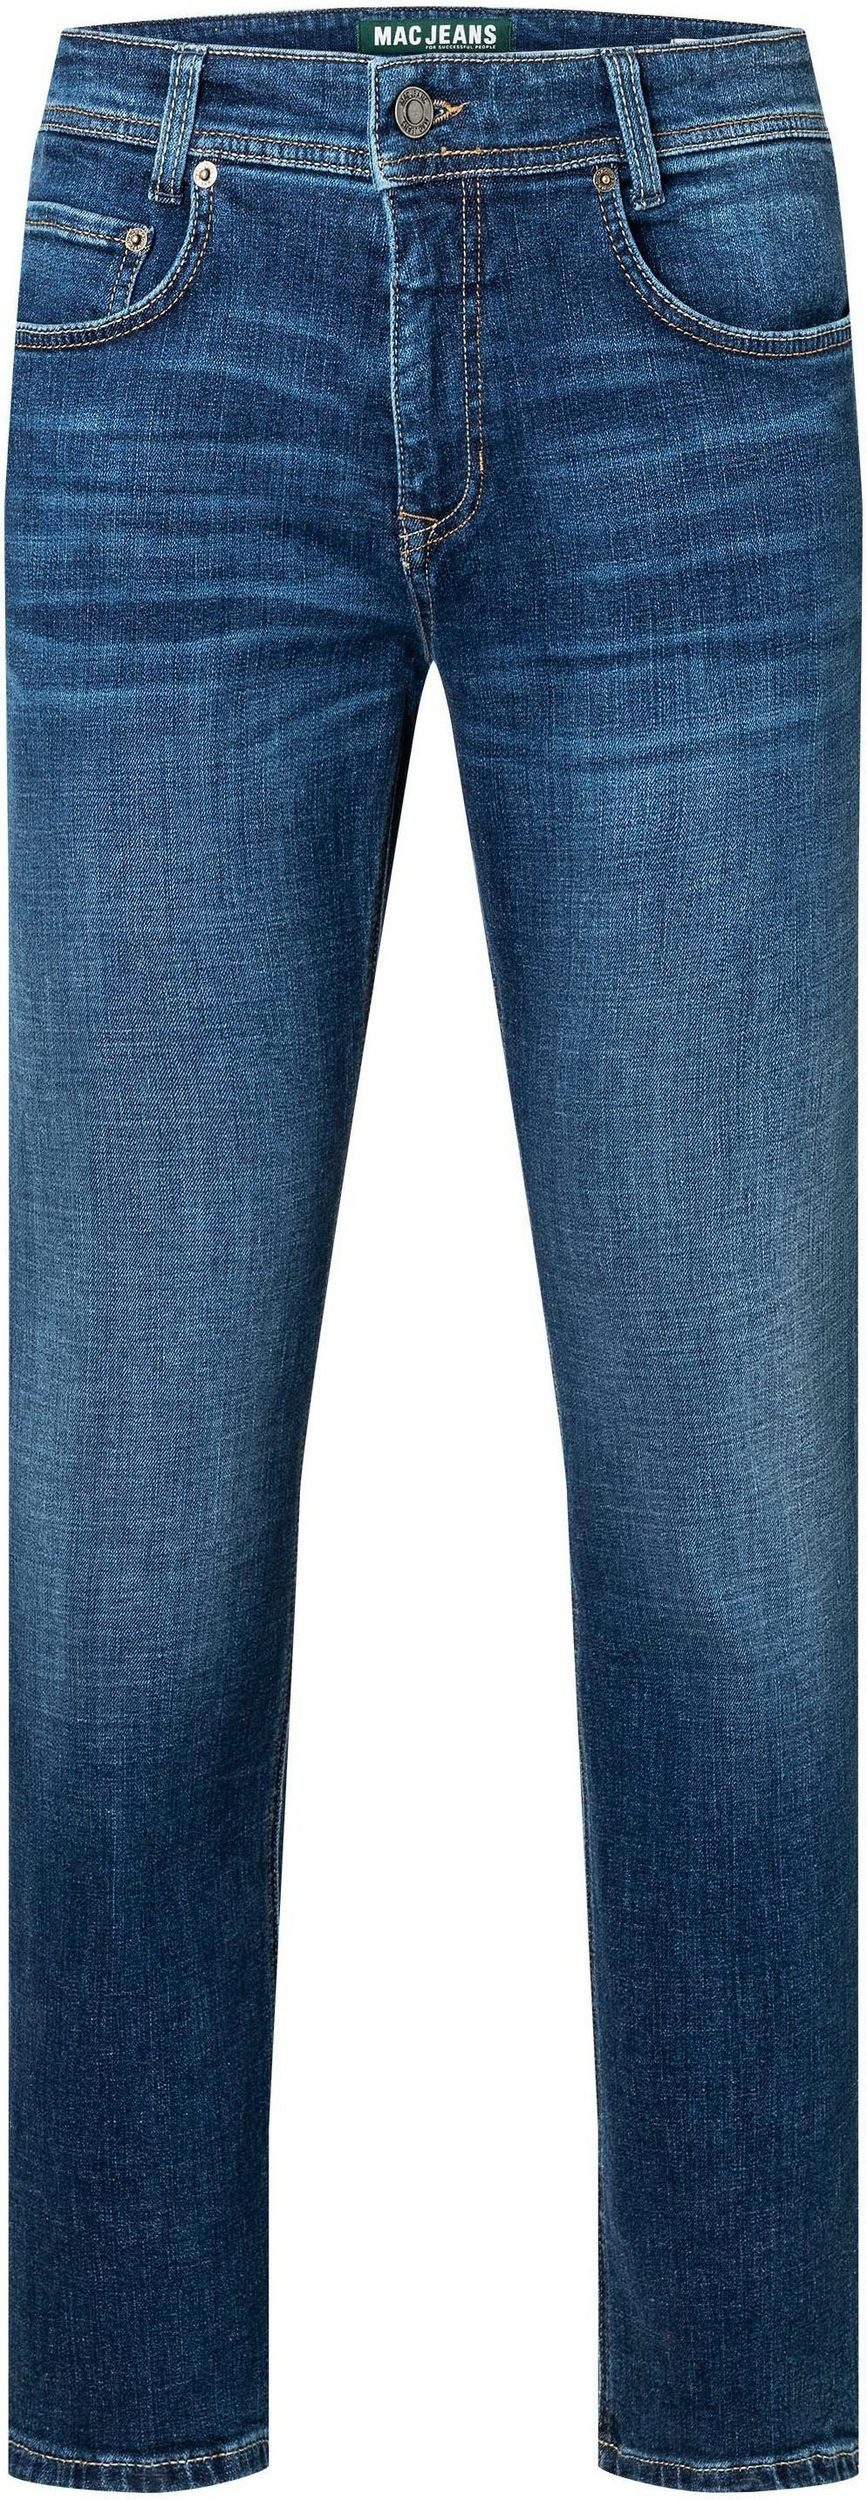 Stretch MAC 5-Pocket-Jeans dark blue Denim Arne